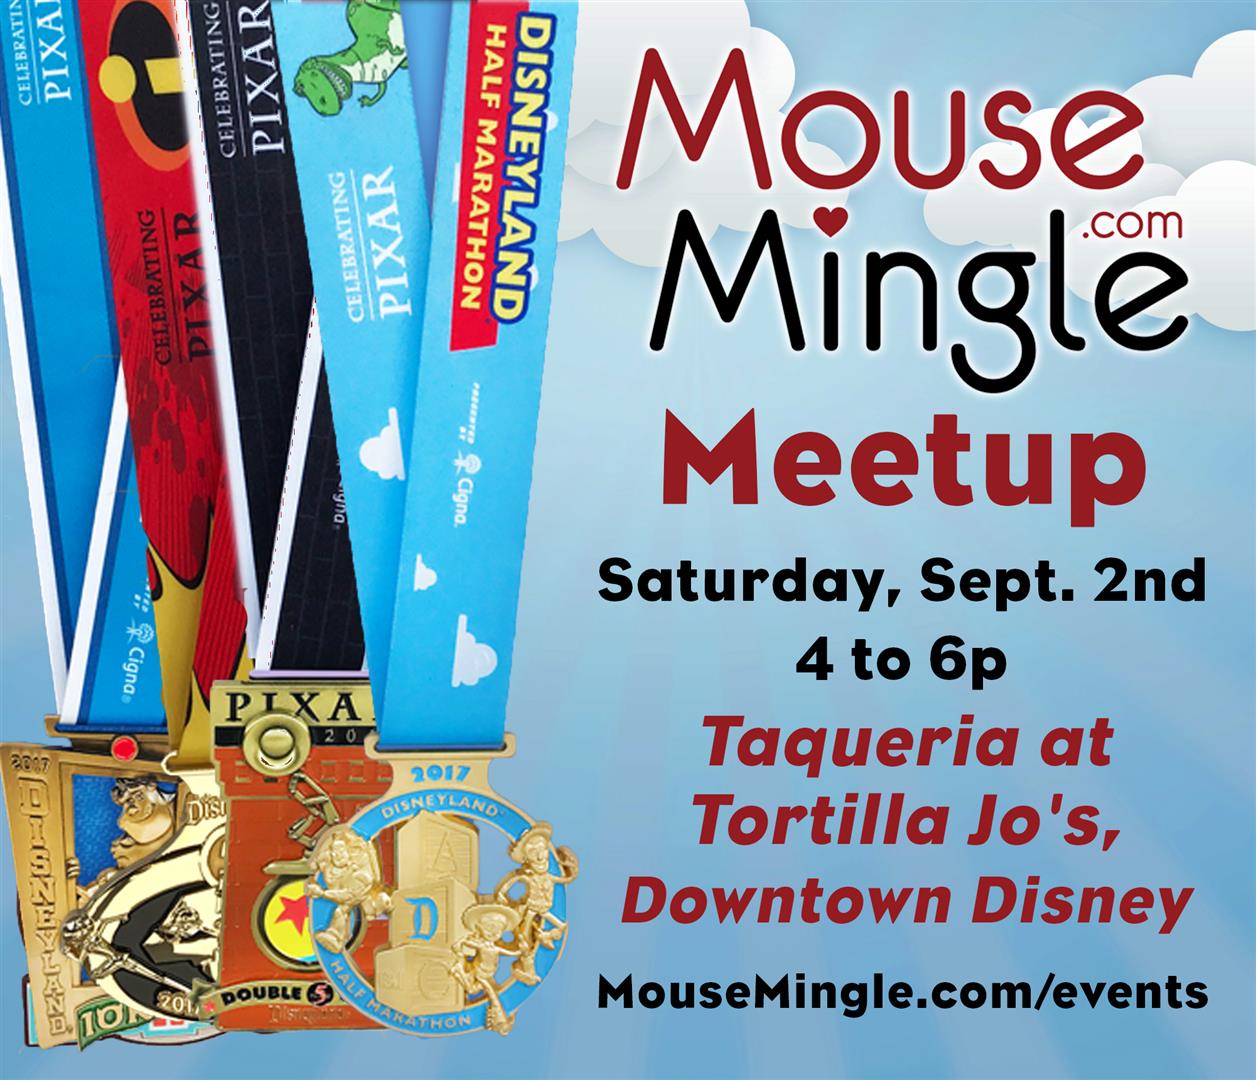 September MouseMingle Meetup - Downtown Disney | MouseMingle.com